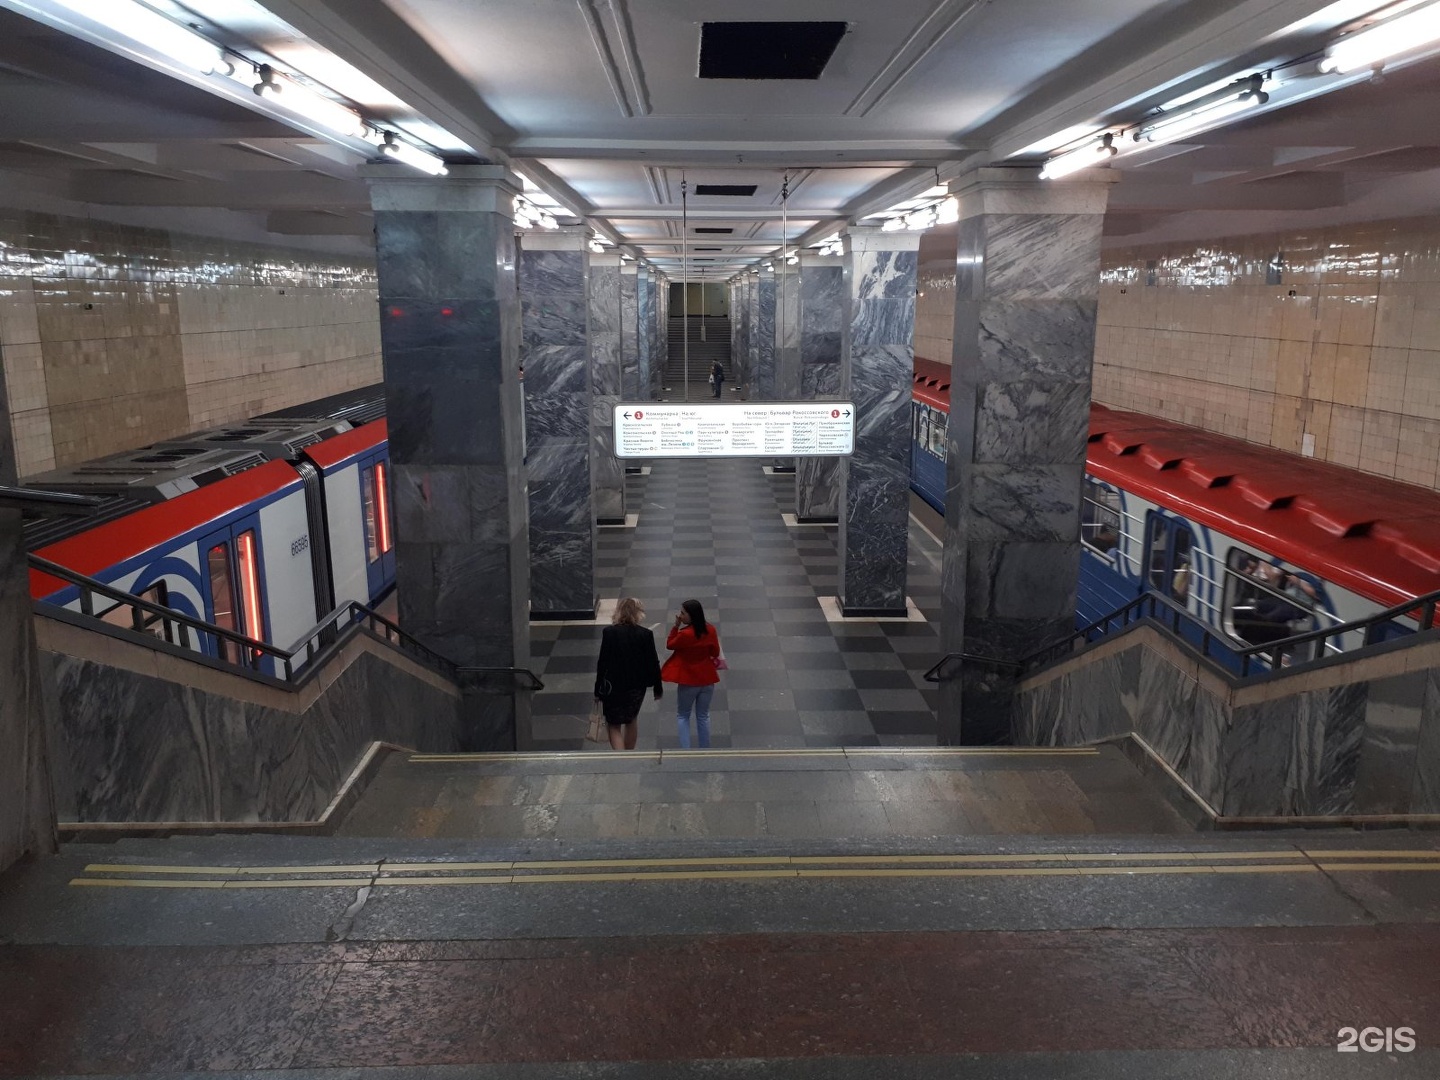 метро сокольники вестибюль